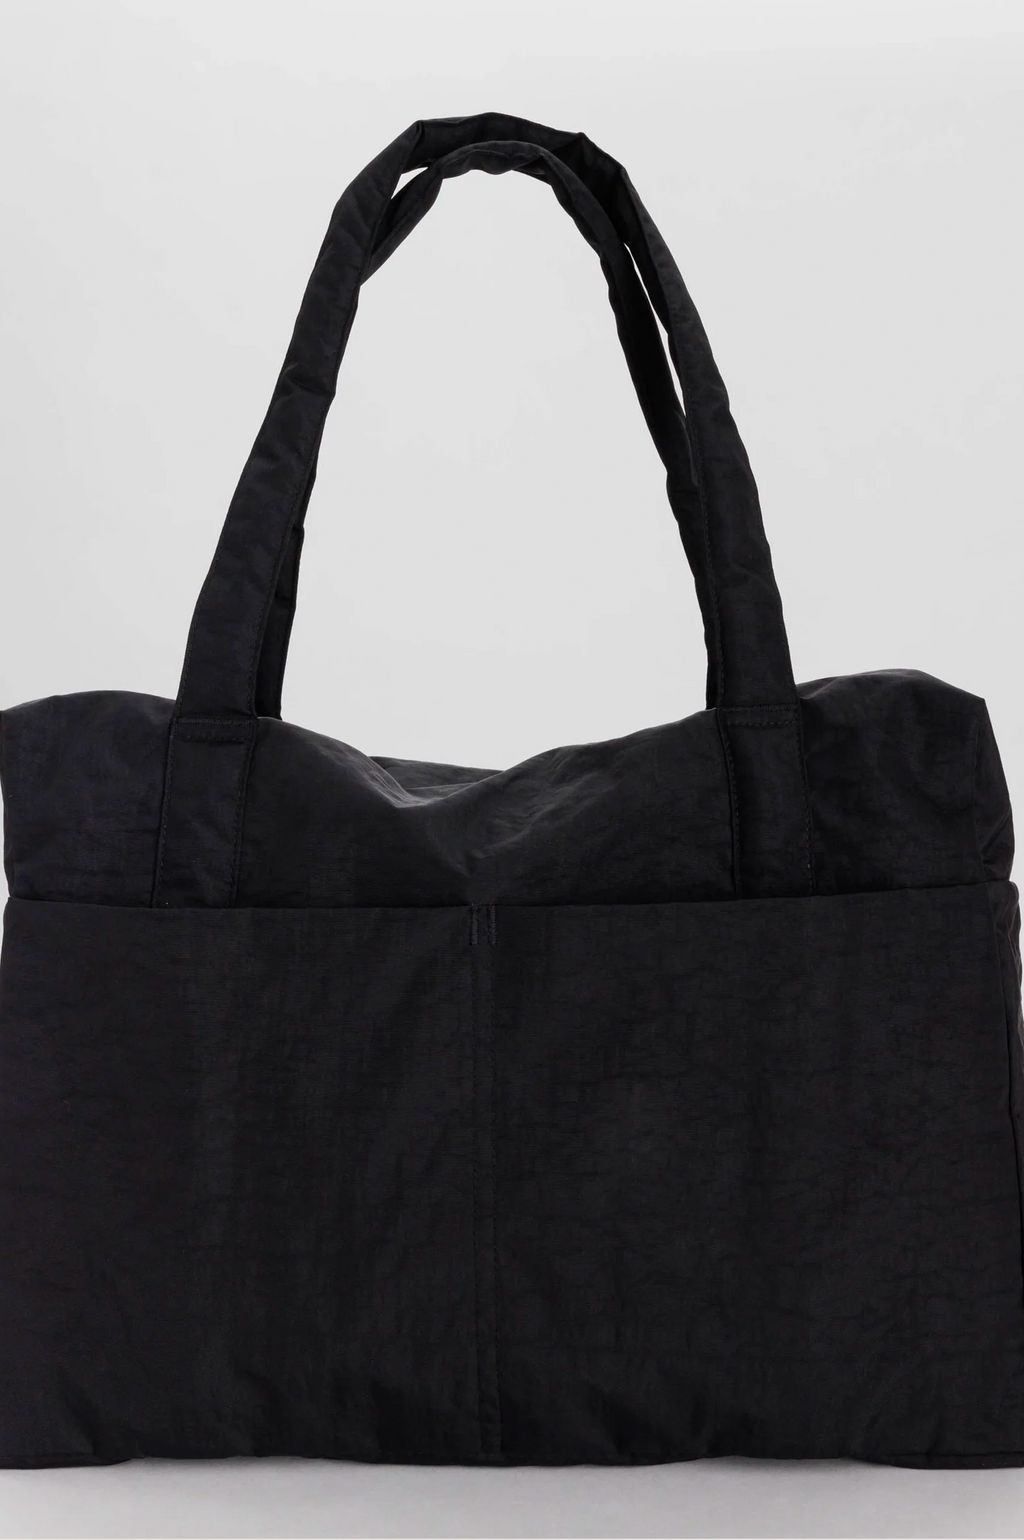 Baggu Black Cloud Carry-on Bag - The Mercantile London